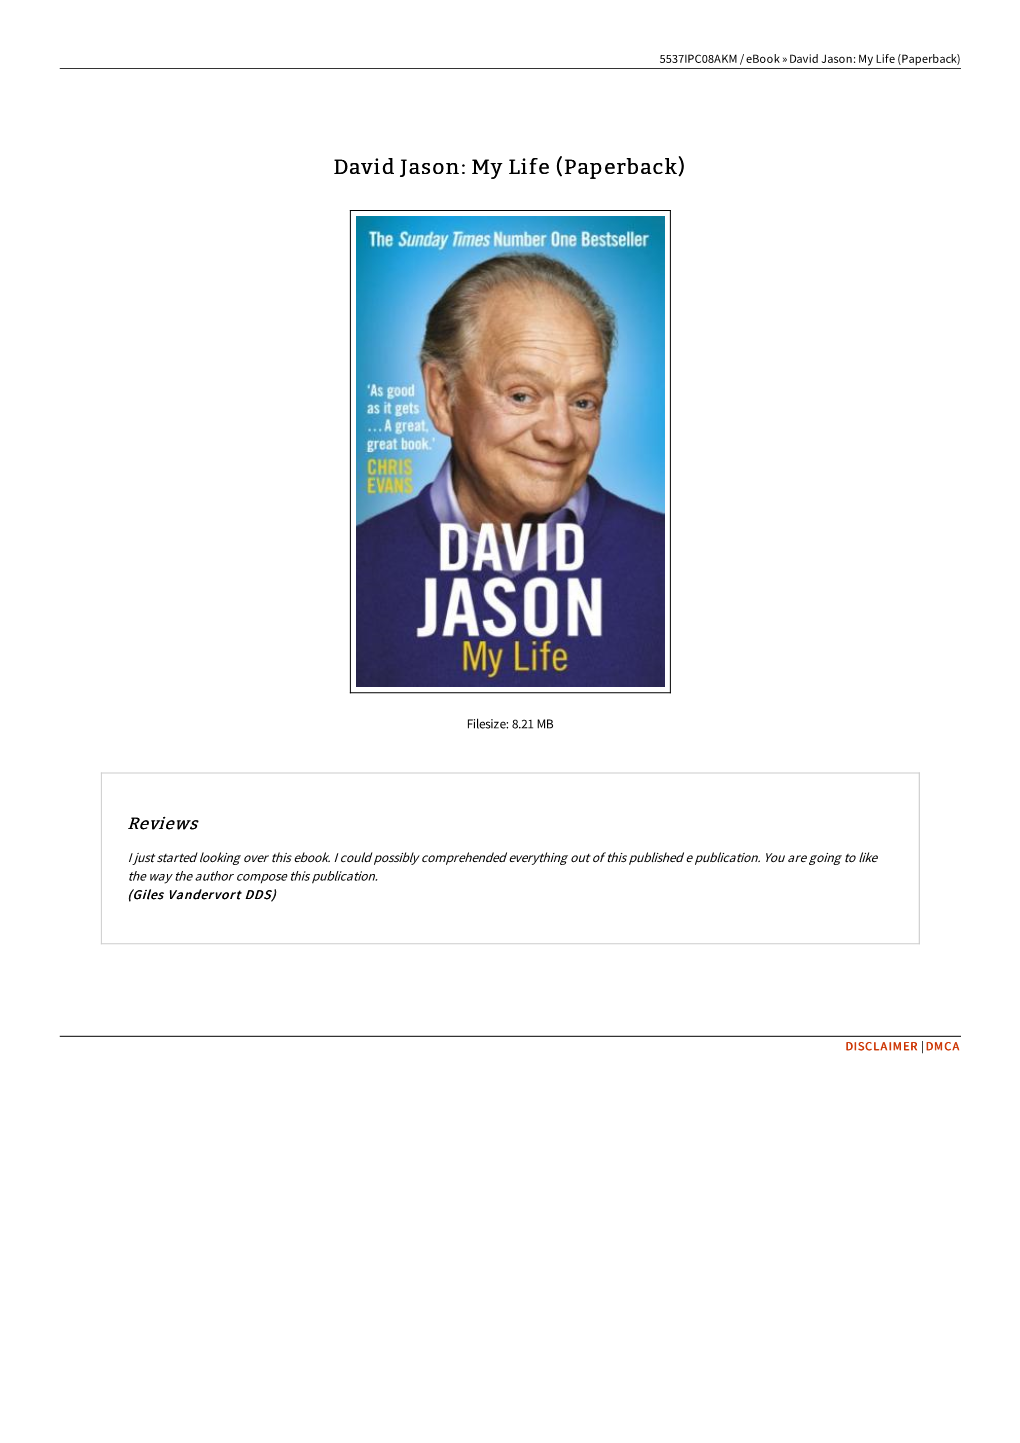 David Jason: My Life (Paperback)